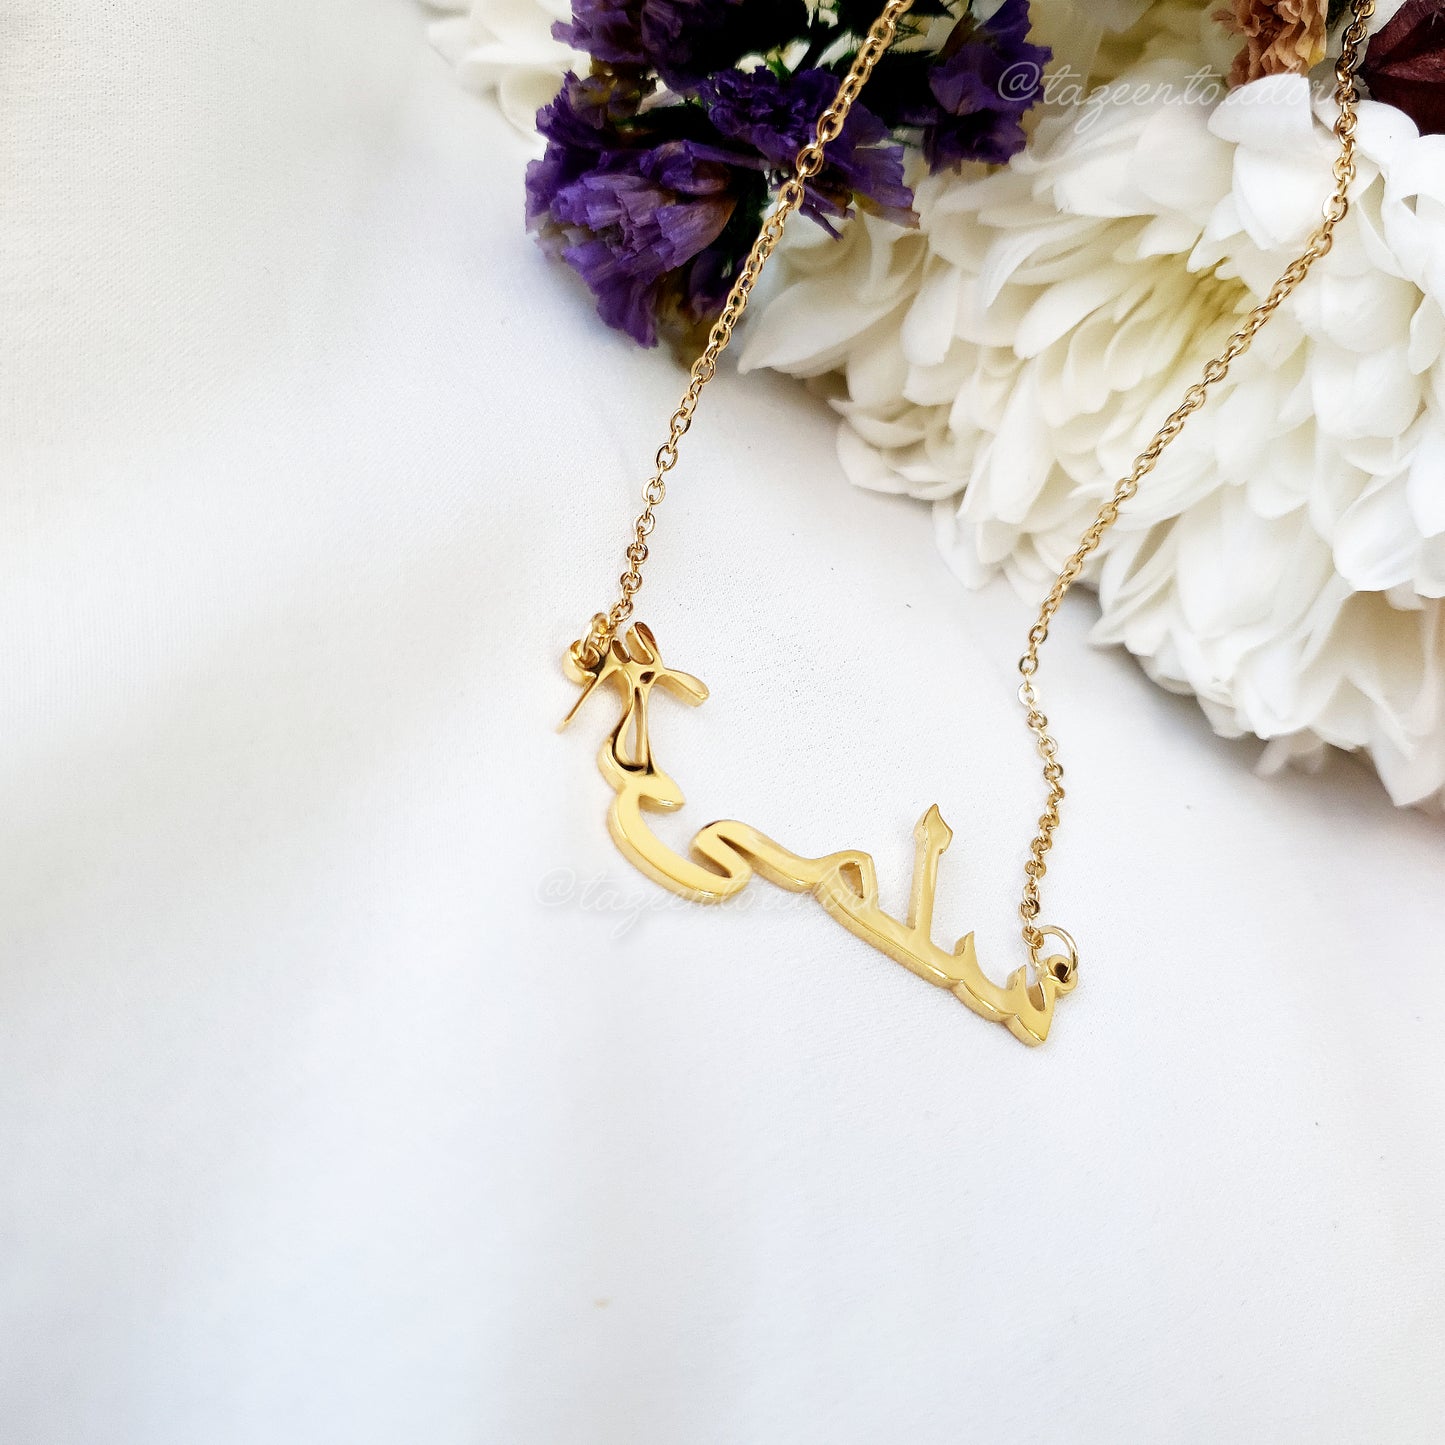 Personalised Custom Single Name Necklace - Anaya Shoe design Limited Edition Jewellery Gift Eid ♡ CINDERELLA